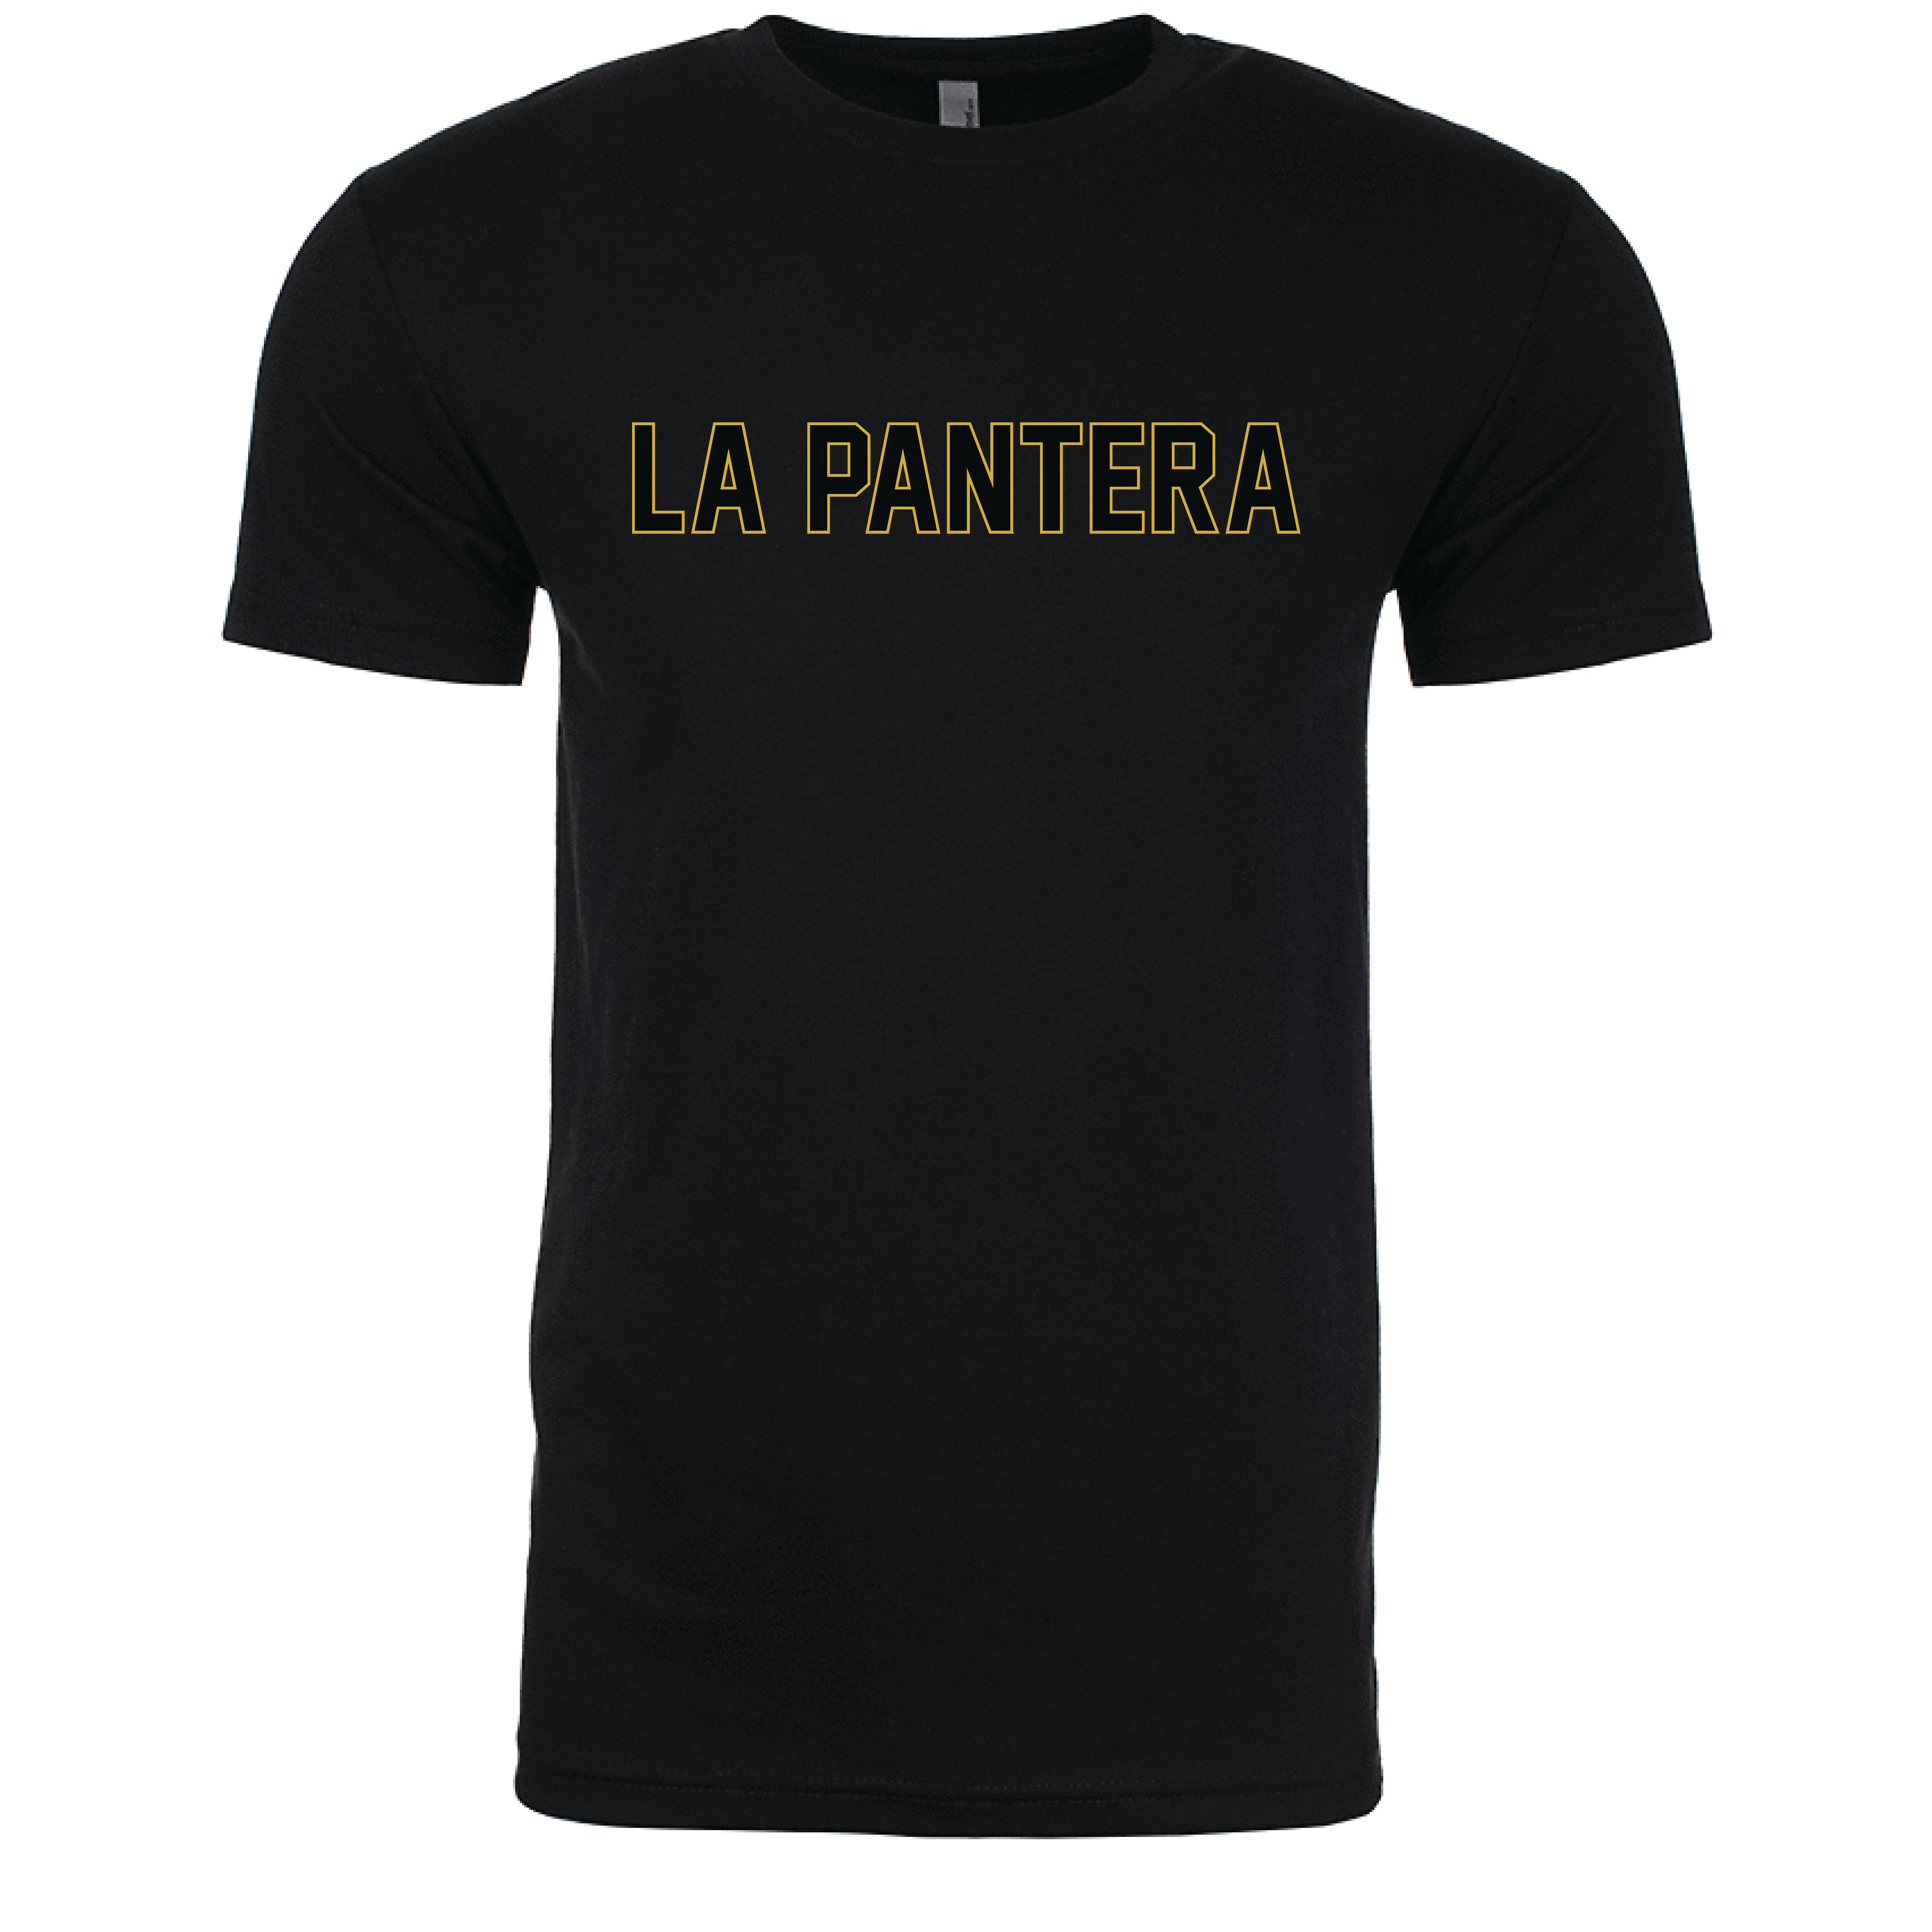 La Pantera, Luis Robert, is here! - South Side Sox